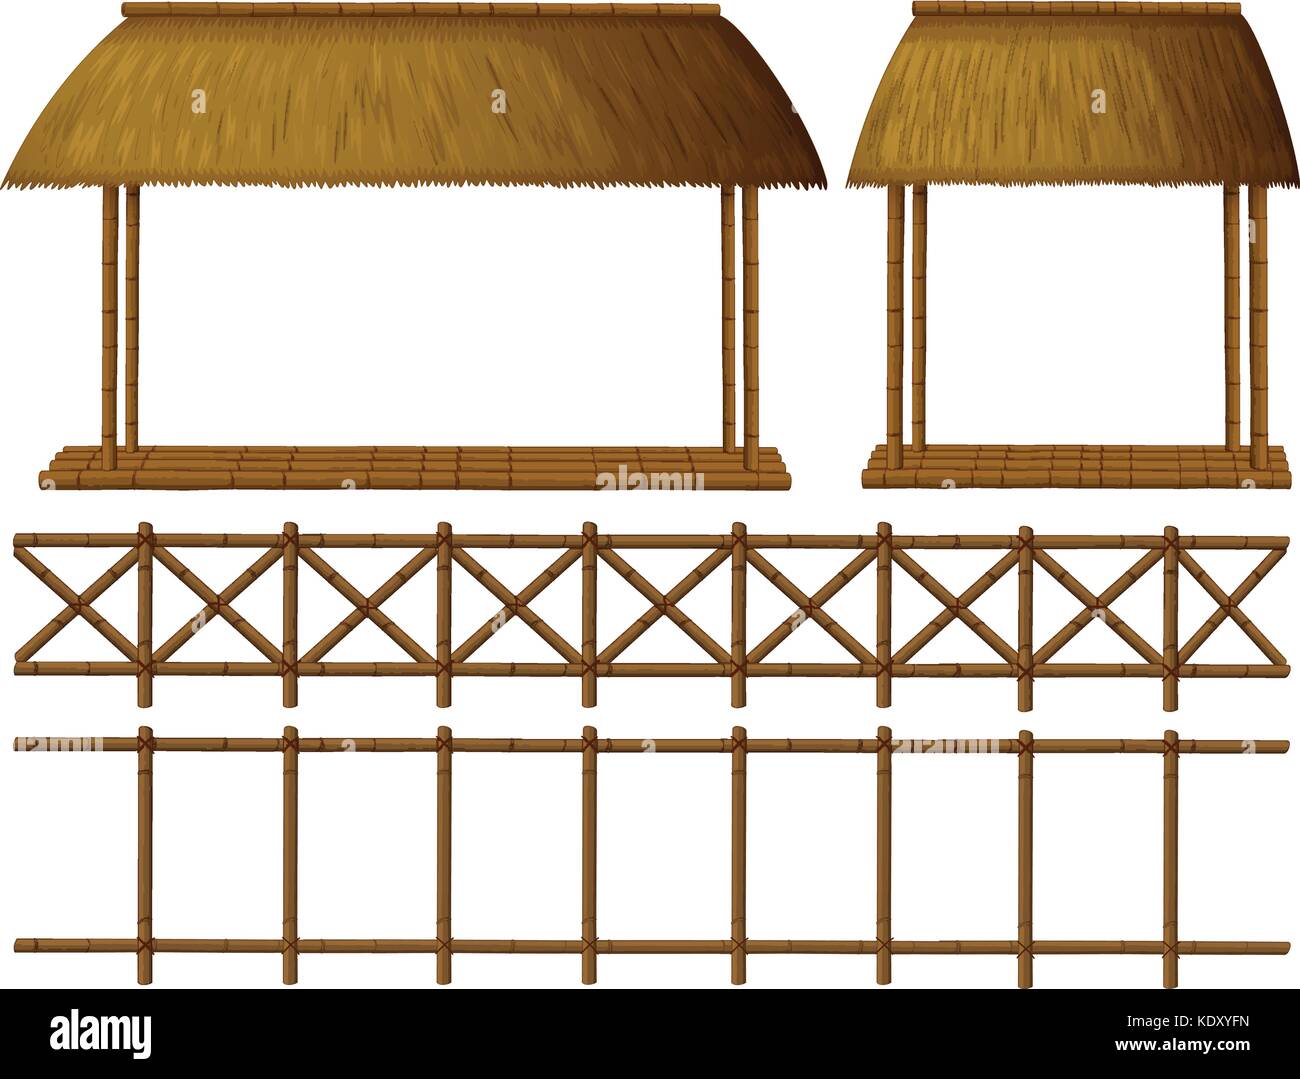 Wooden pavillion and fence design illustration Stock Vector